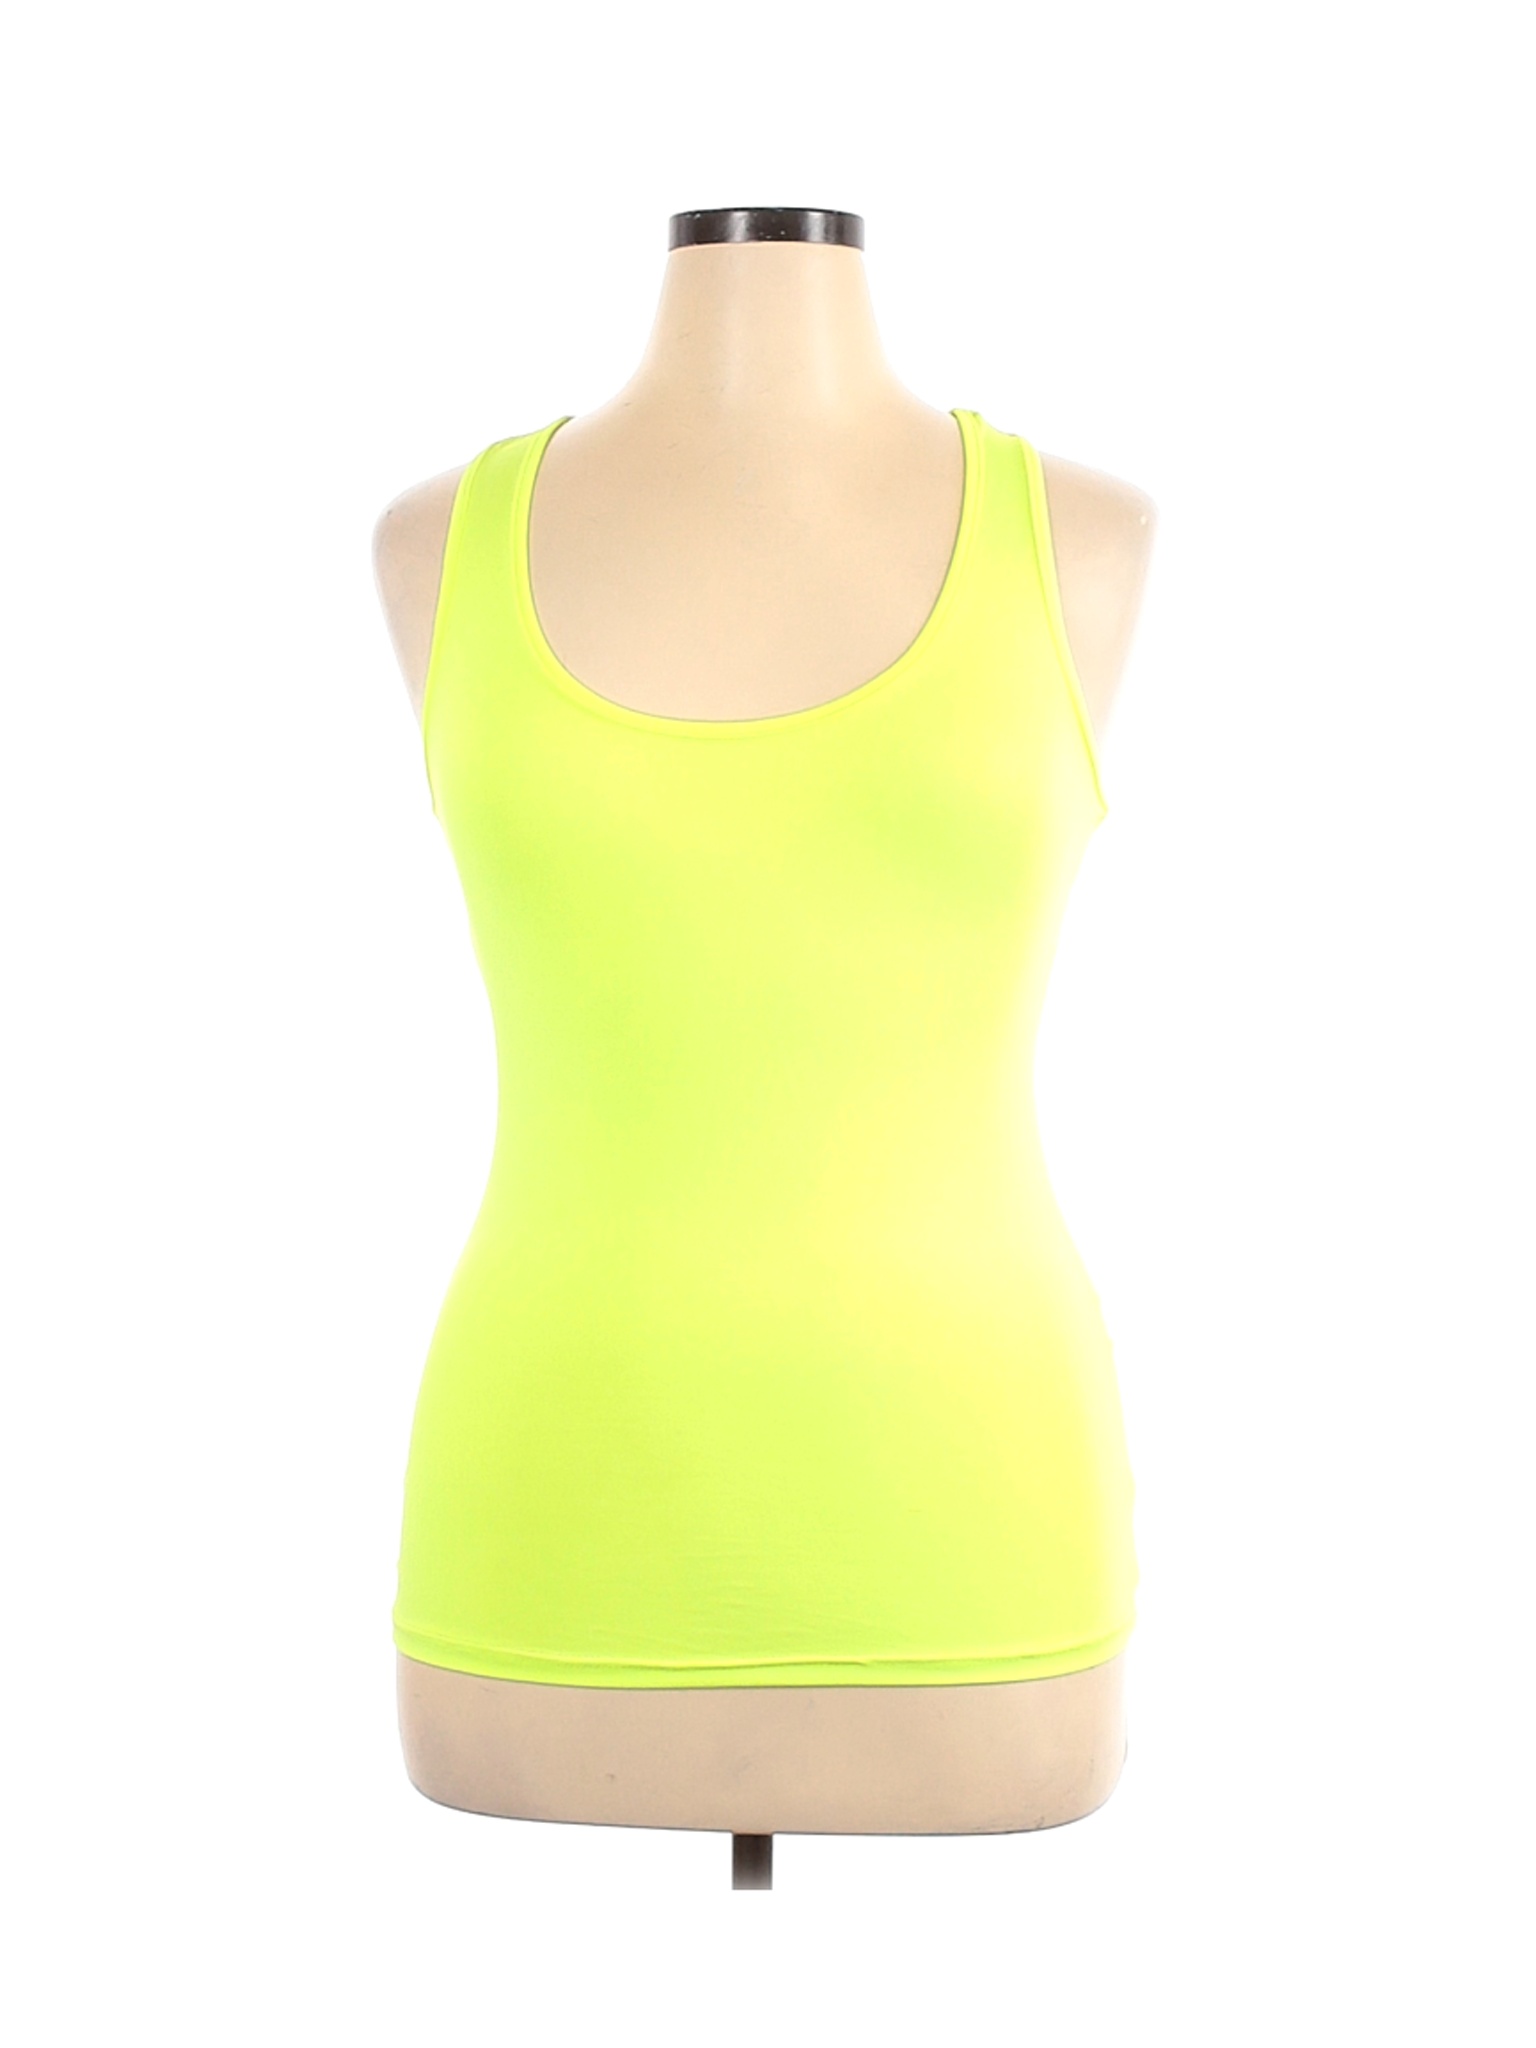 Assorted Brands Women Yellow Tank Top XL | eBay